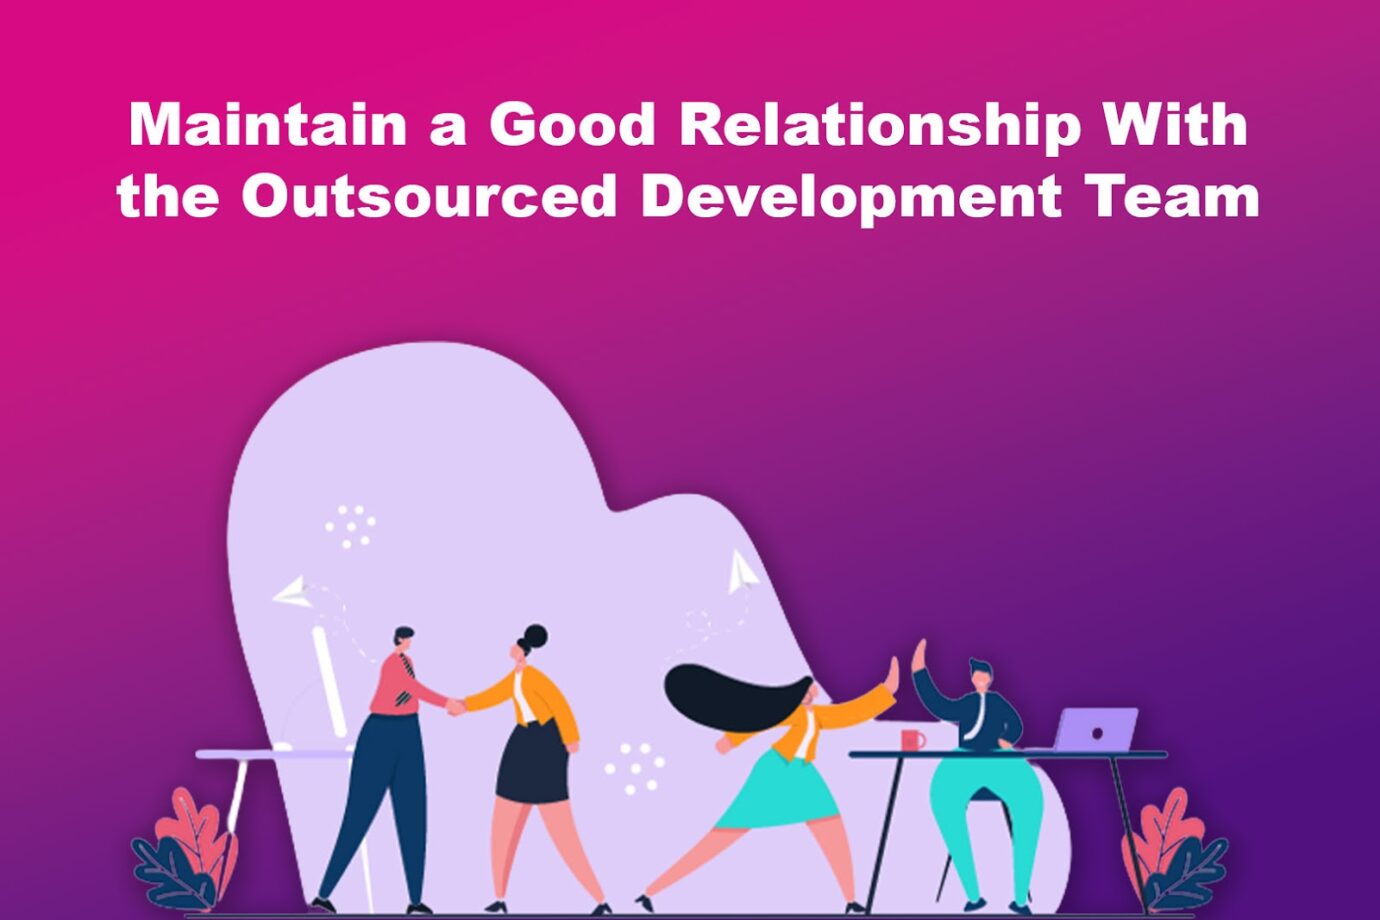 Outsourced Development Team - Good Relationship